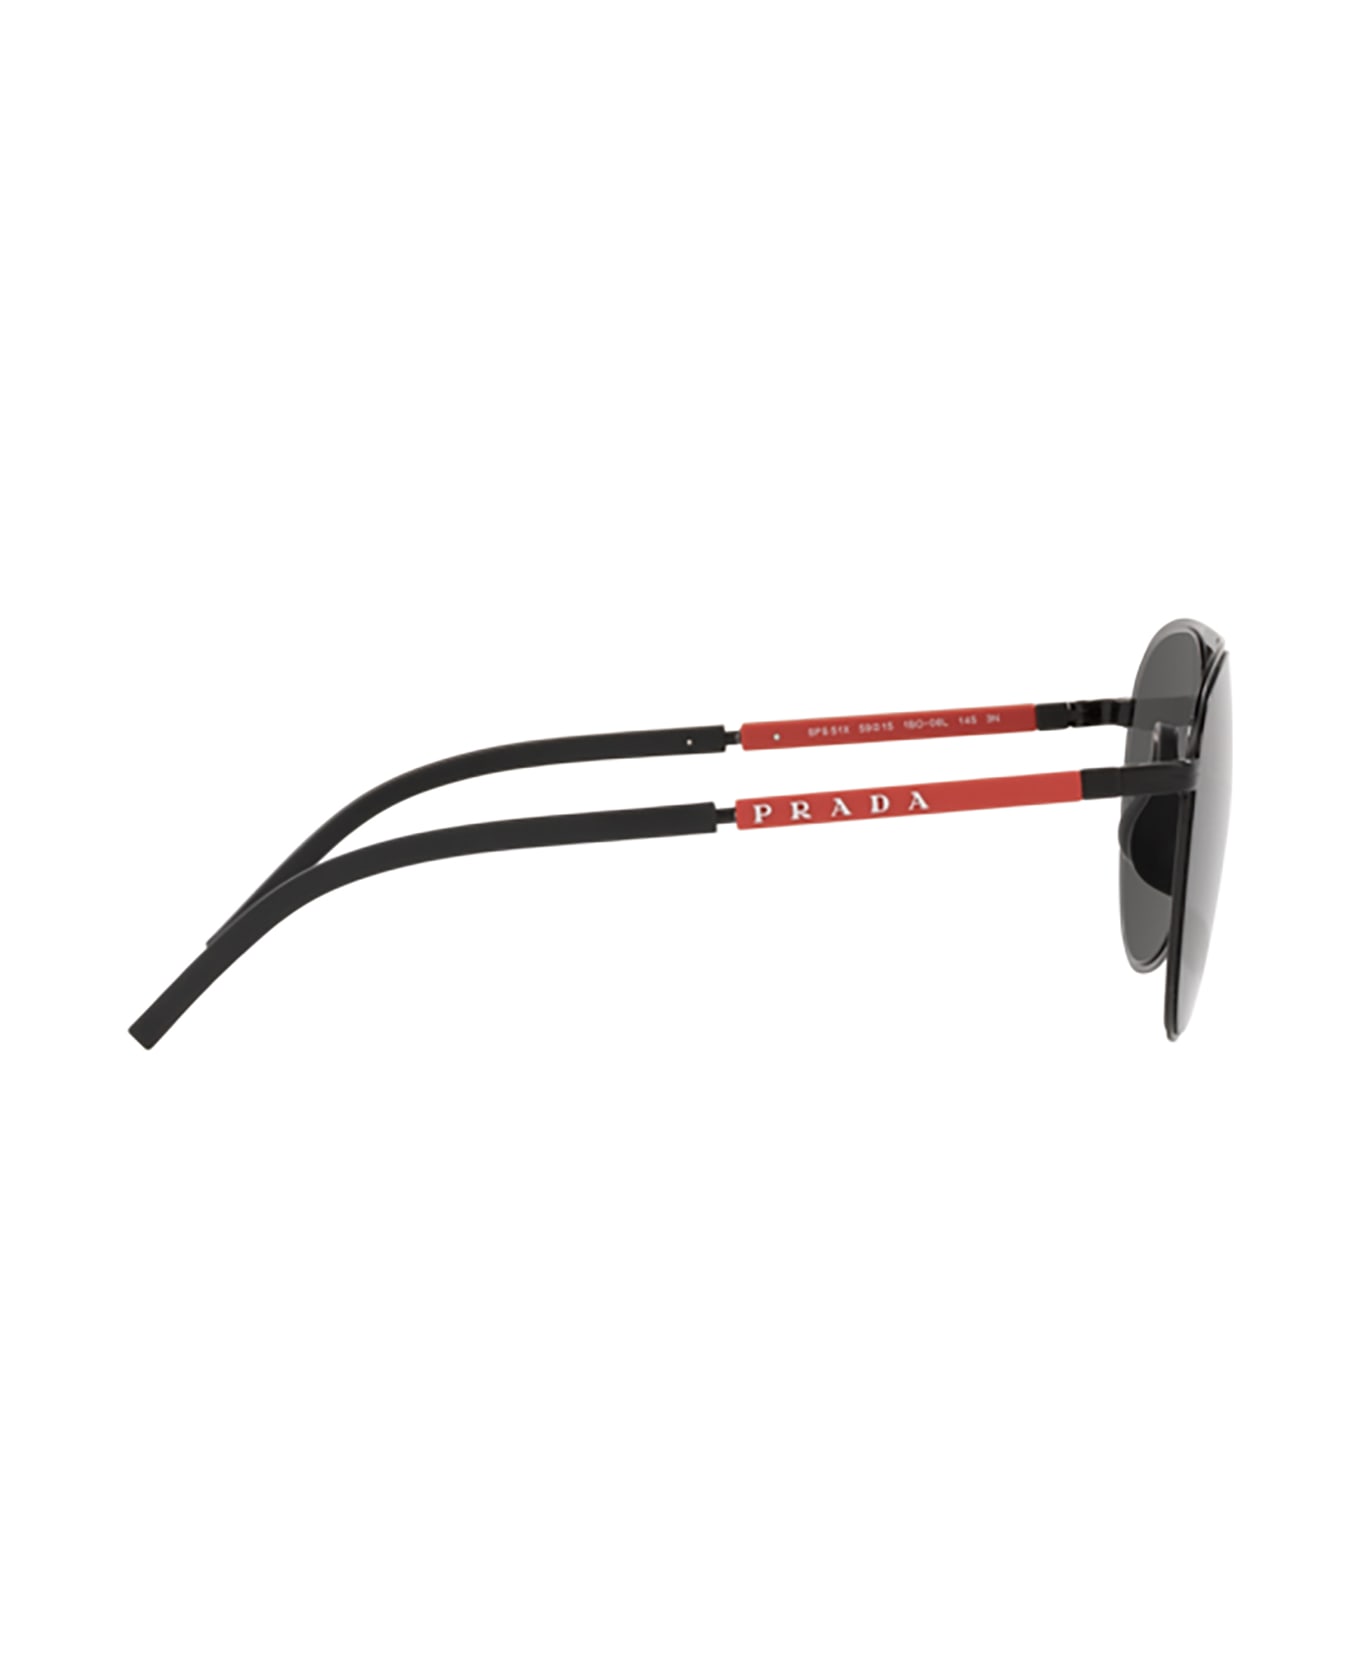 Prada Linea Rossa Ps 51xs Matte Black Sunglasses - Matte Black サングラス